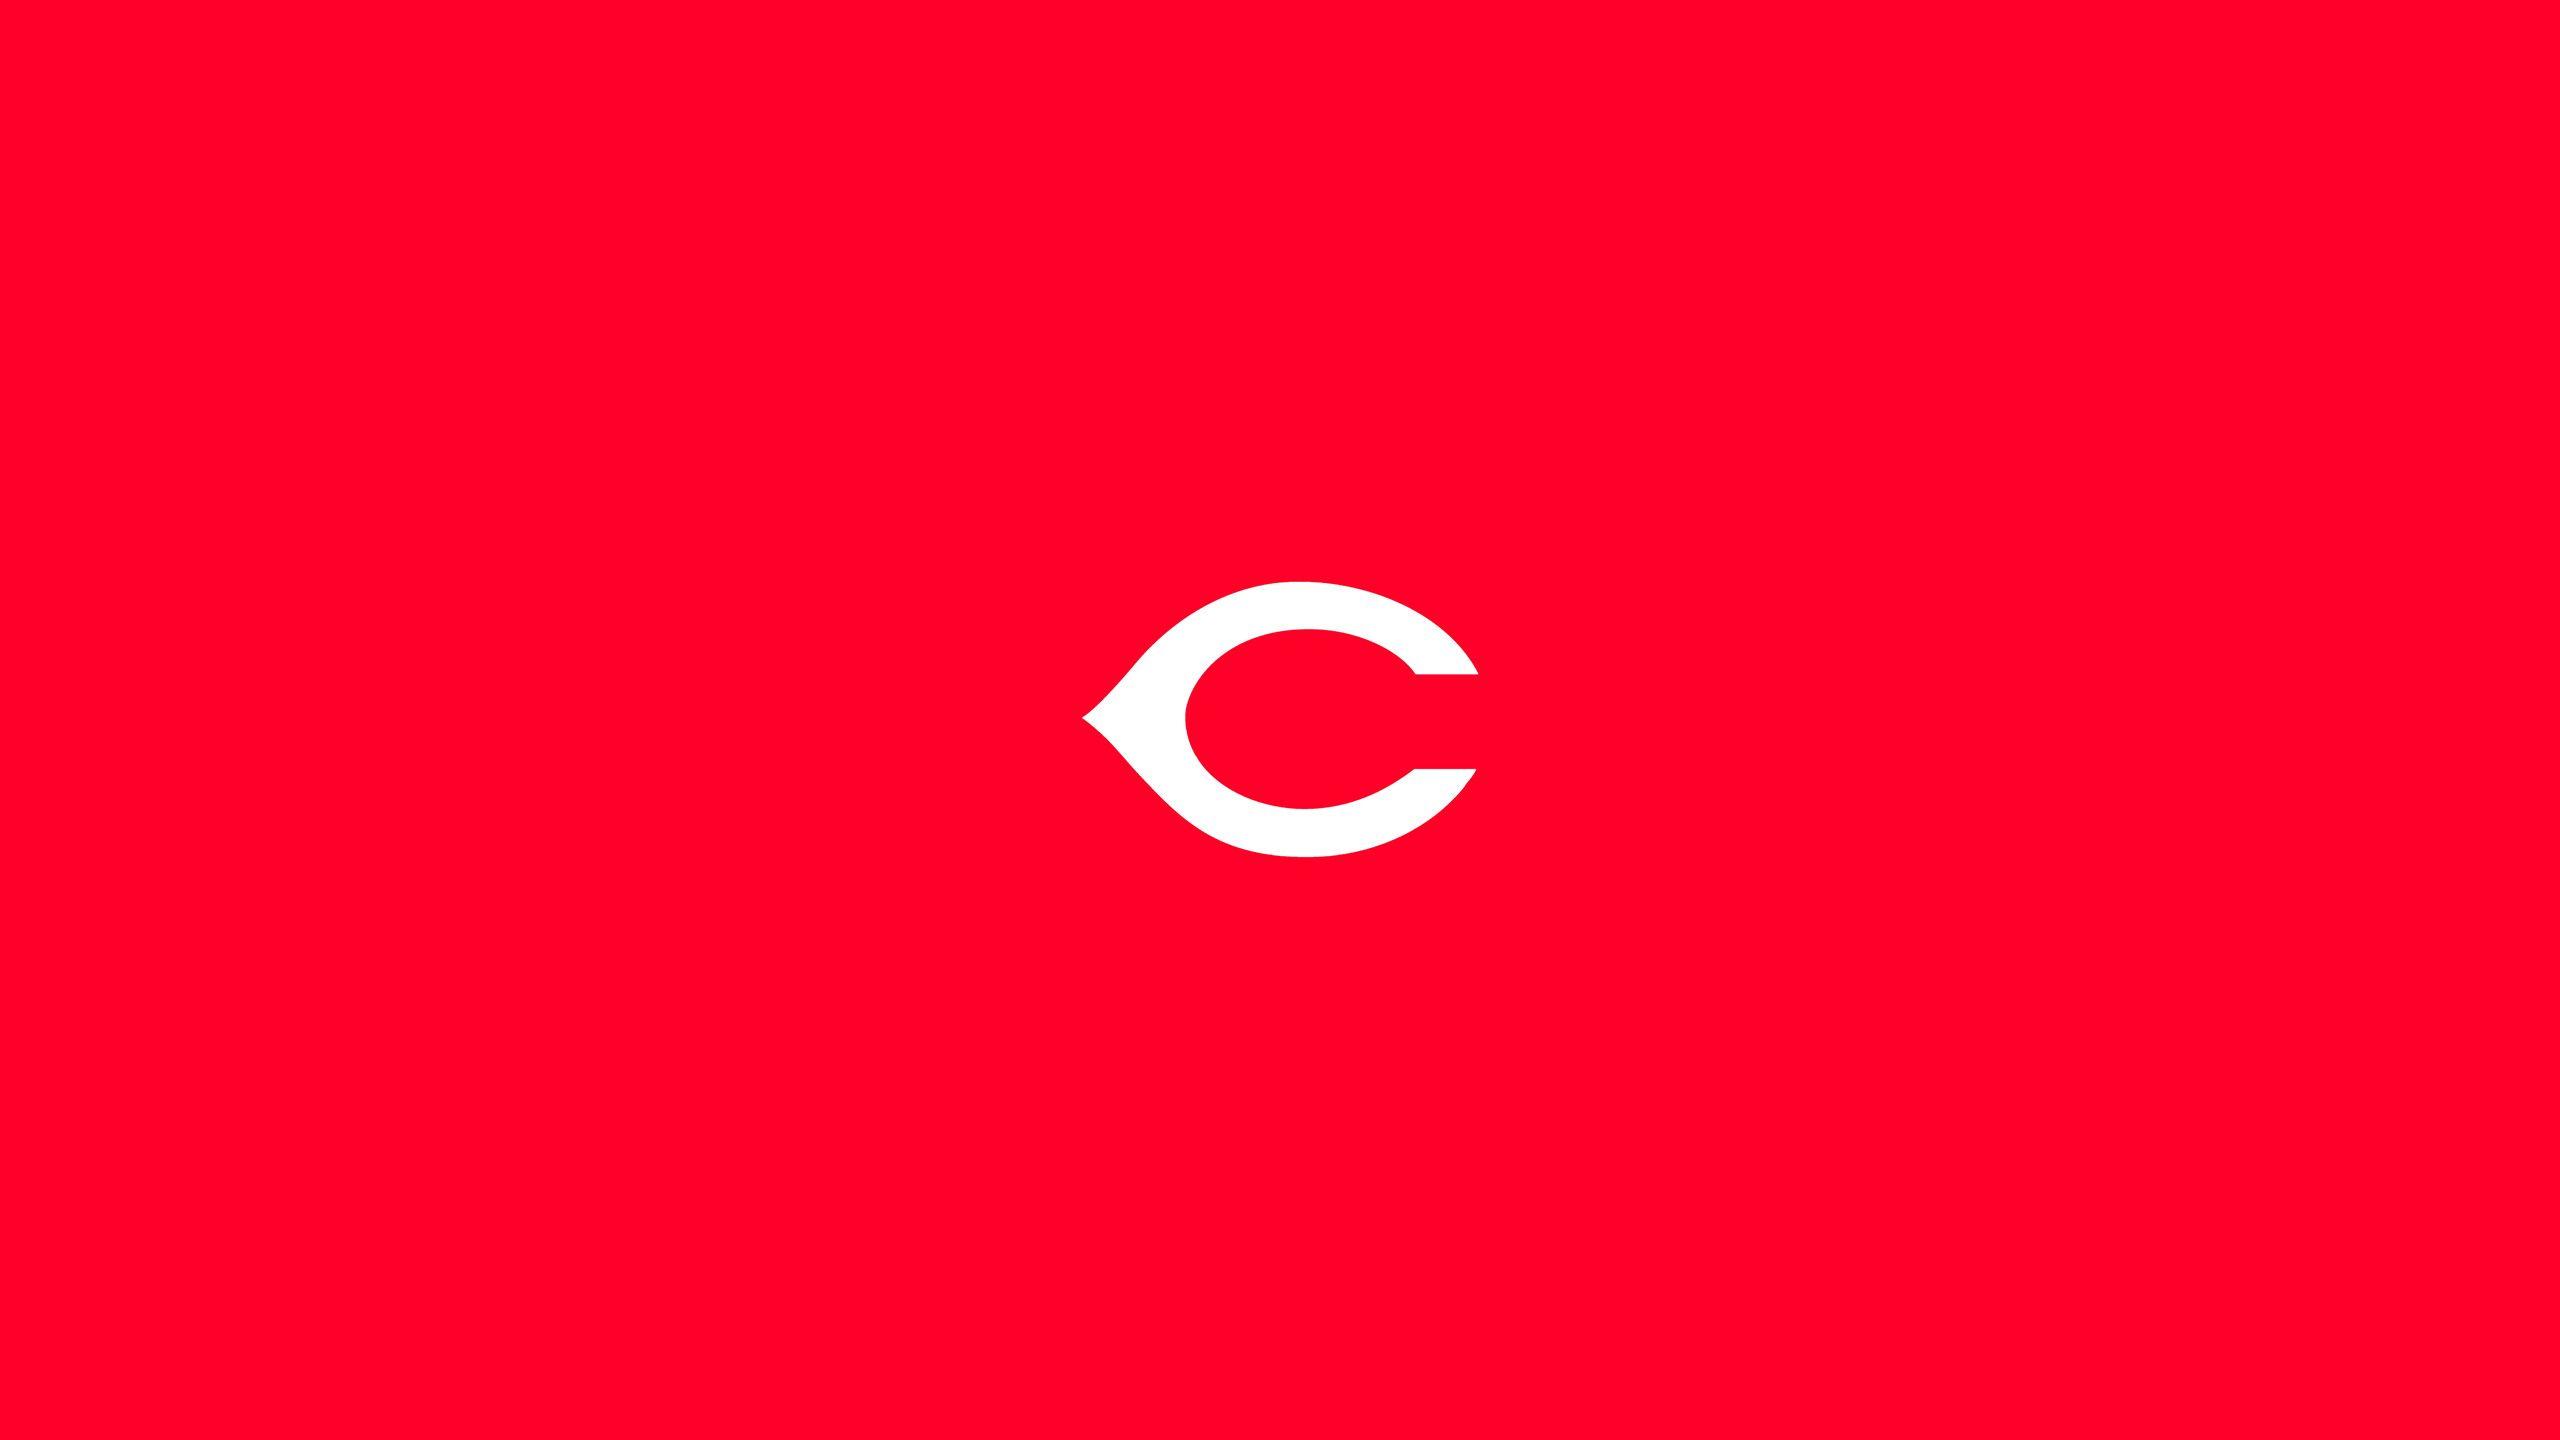 Cincinnati Reds iPhone Wallpaper